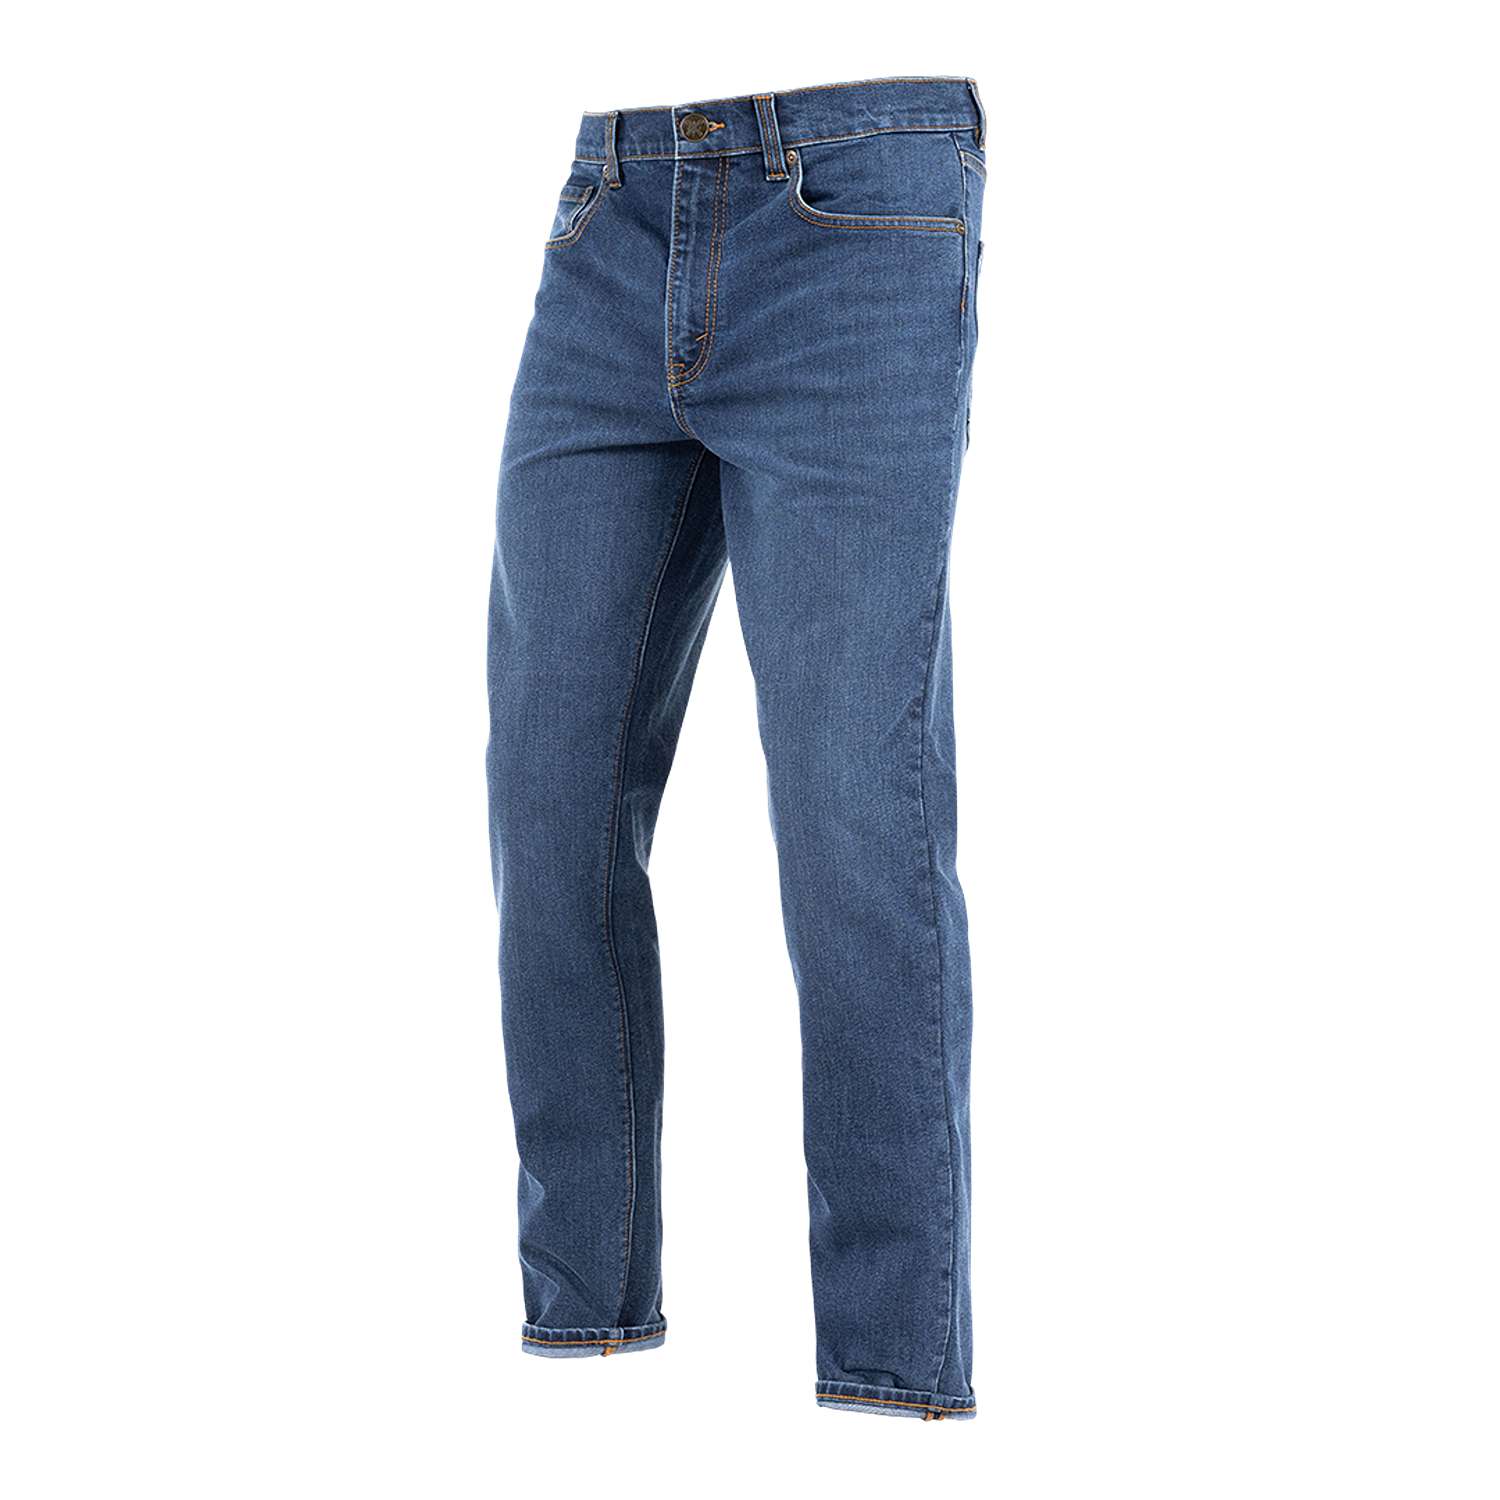 Image of John Doe Classic Tapered Jeans Indigo Size W36/L34 EN